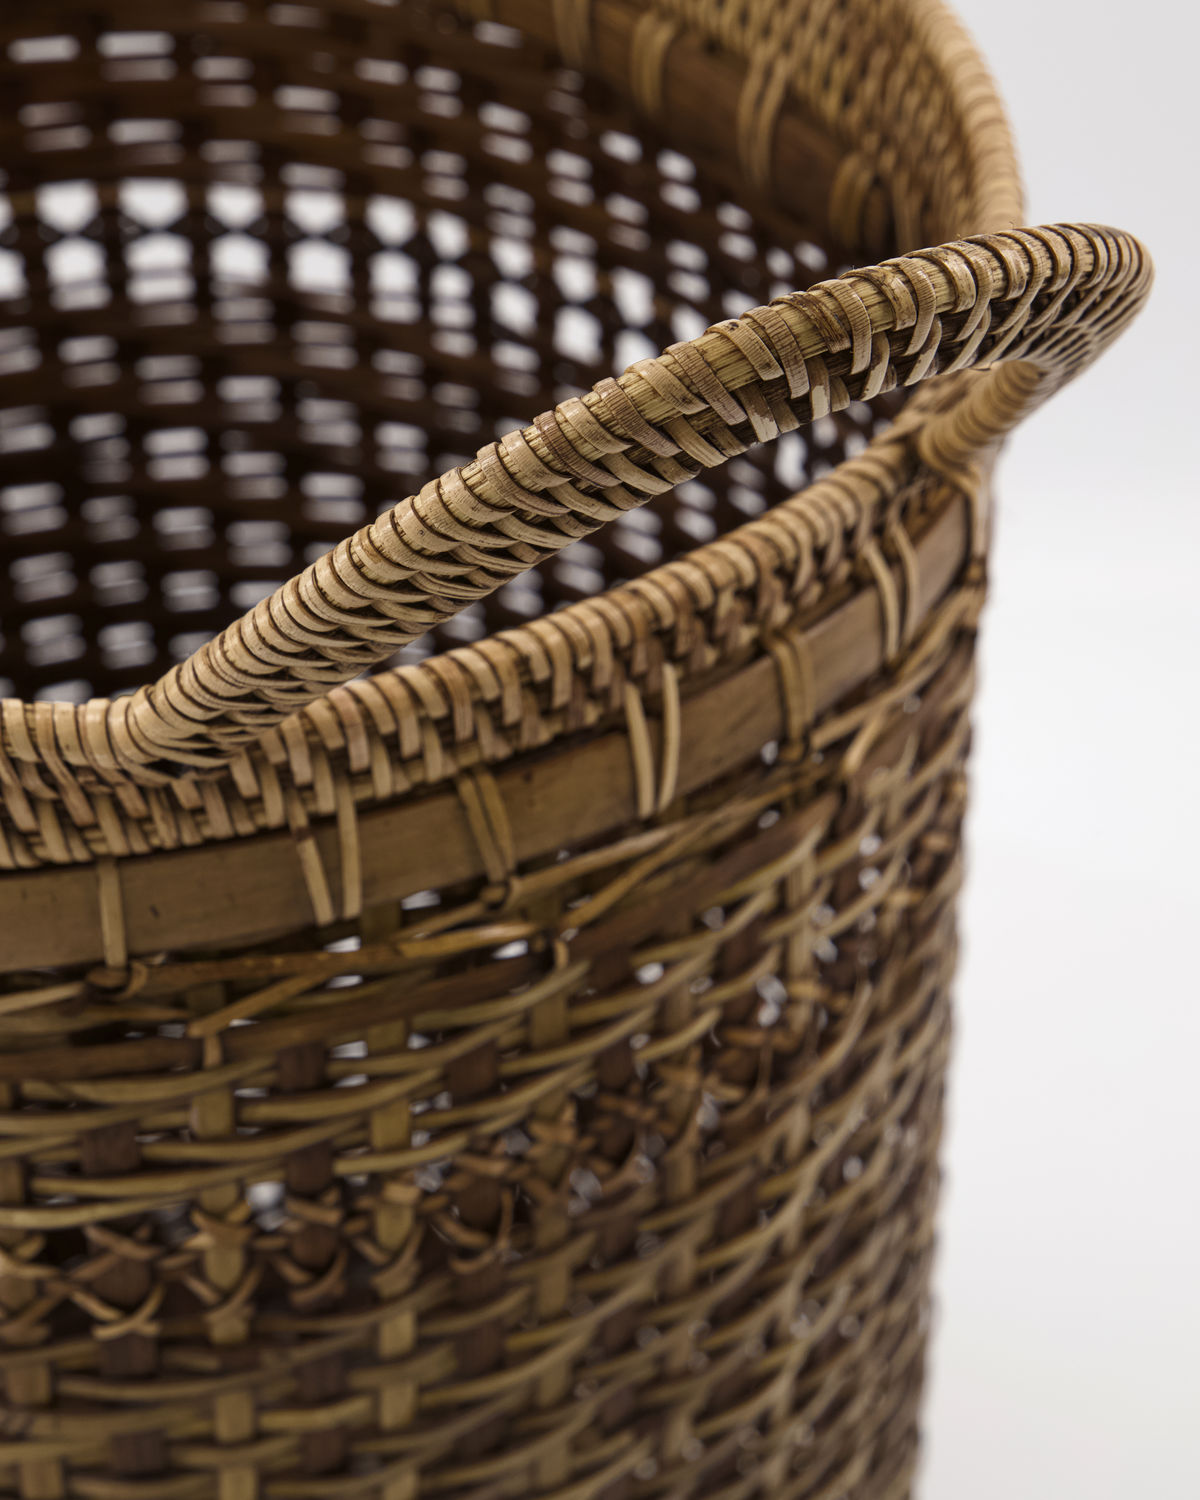 canguu baskets set of 2